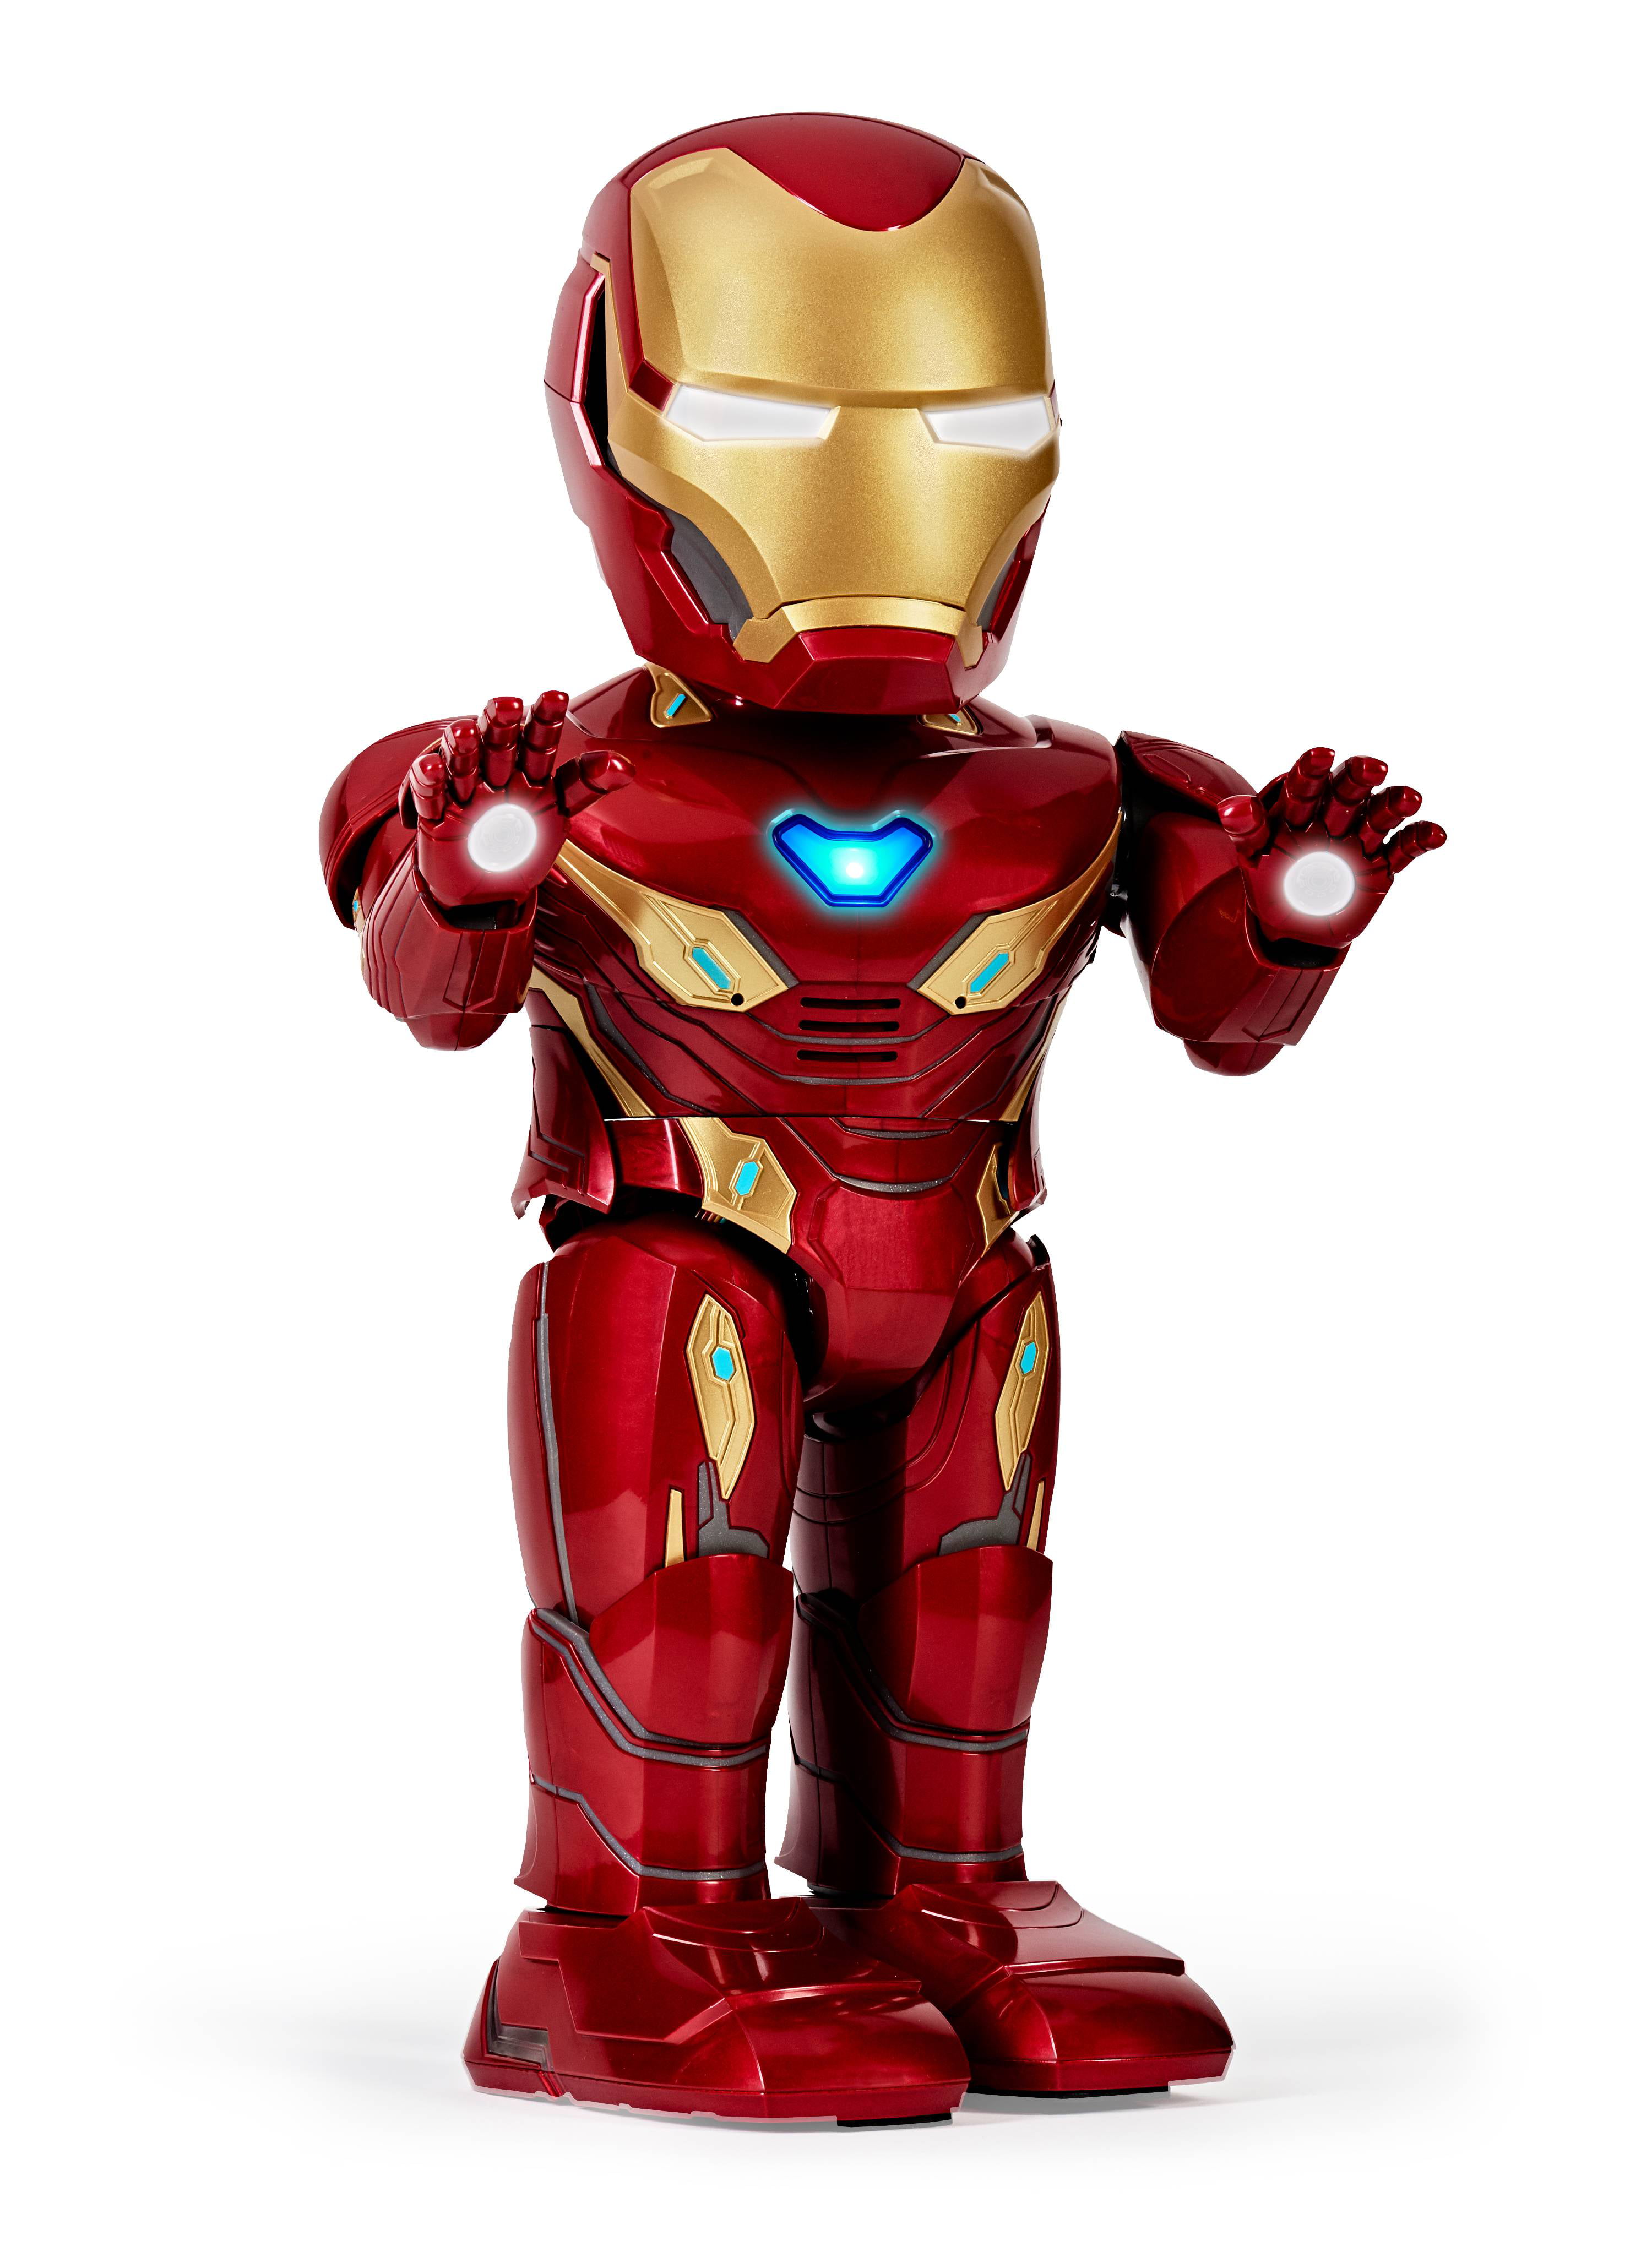 Red Endgame Iron Man MK50 Robot Details about   UBTECH Marvel Avengers 